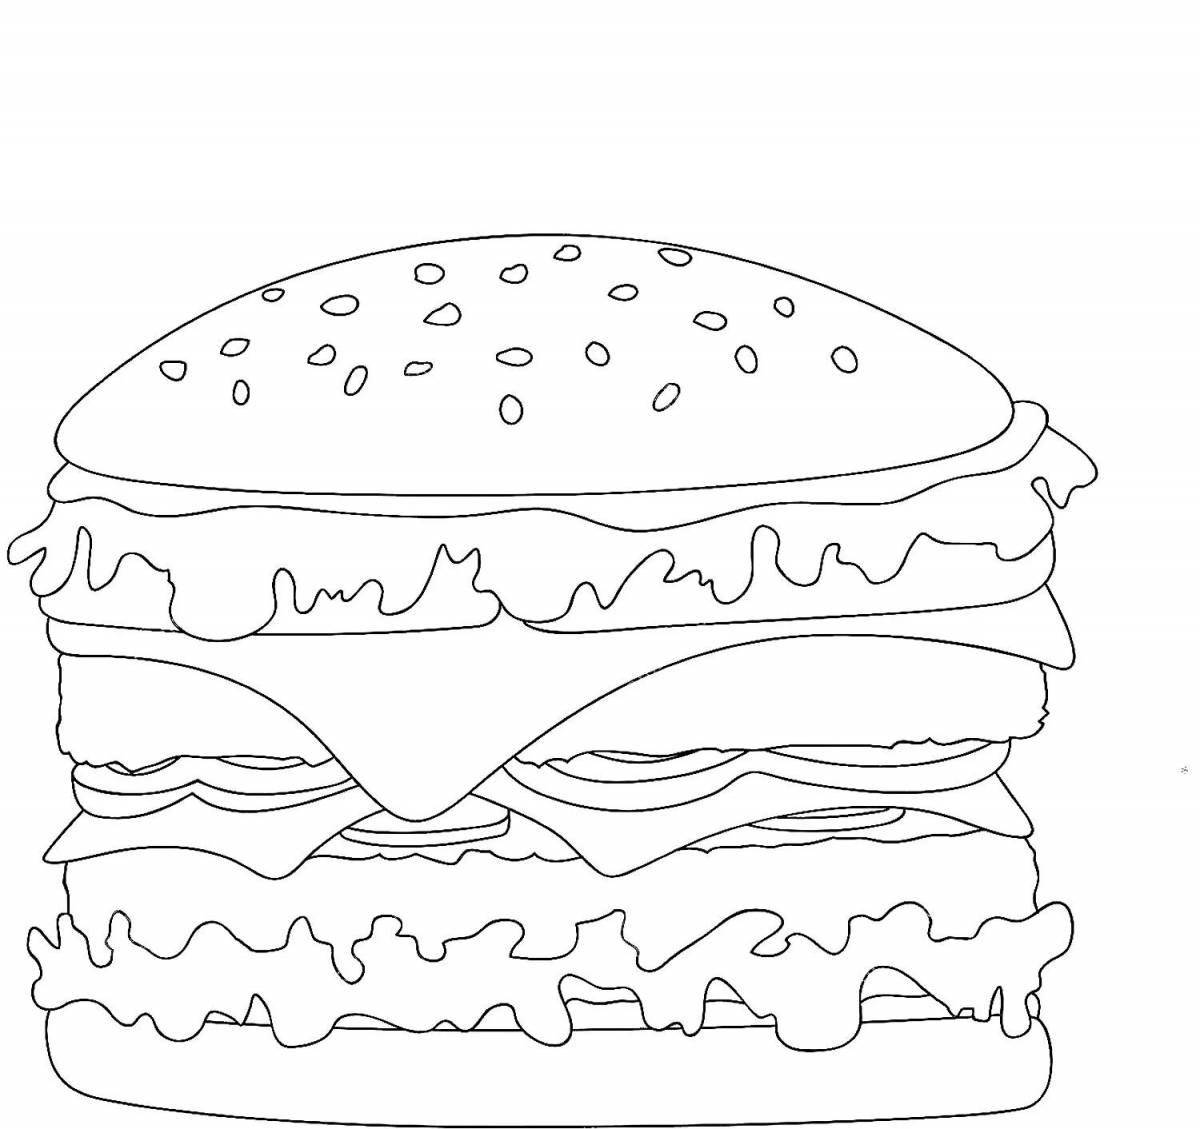 Fun burger king coloring page